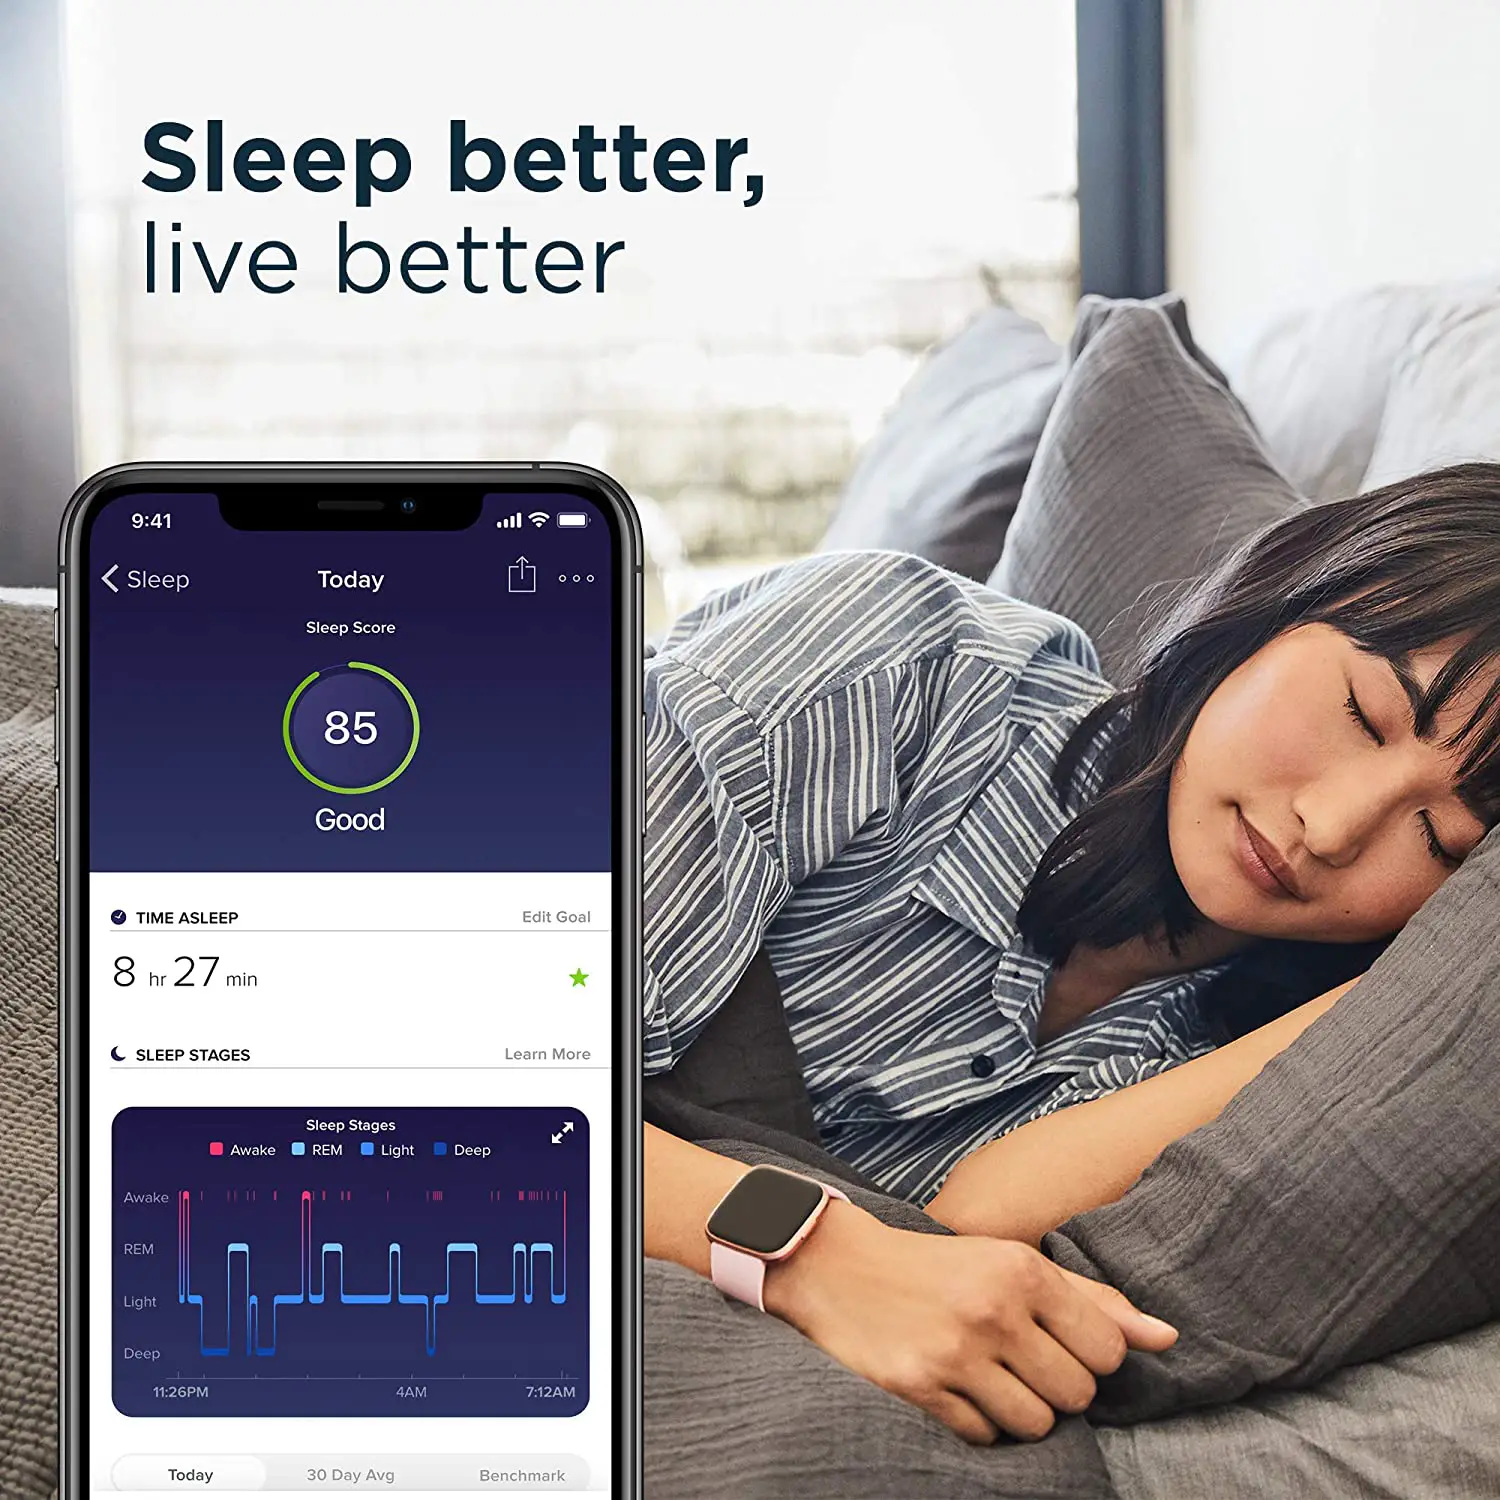 Digital sleep trackers for monitoring sleep patterns